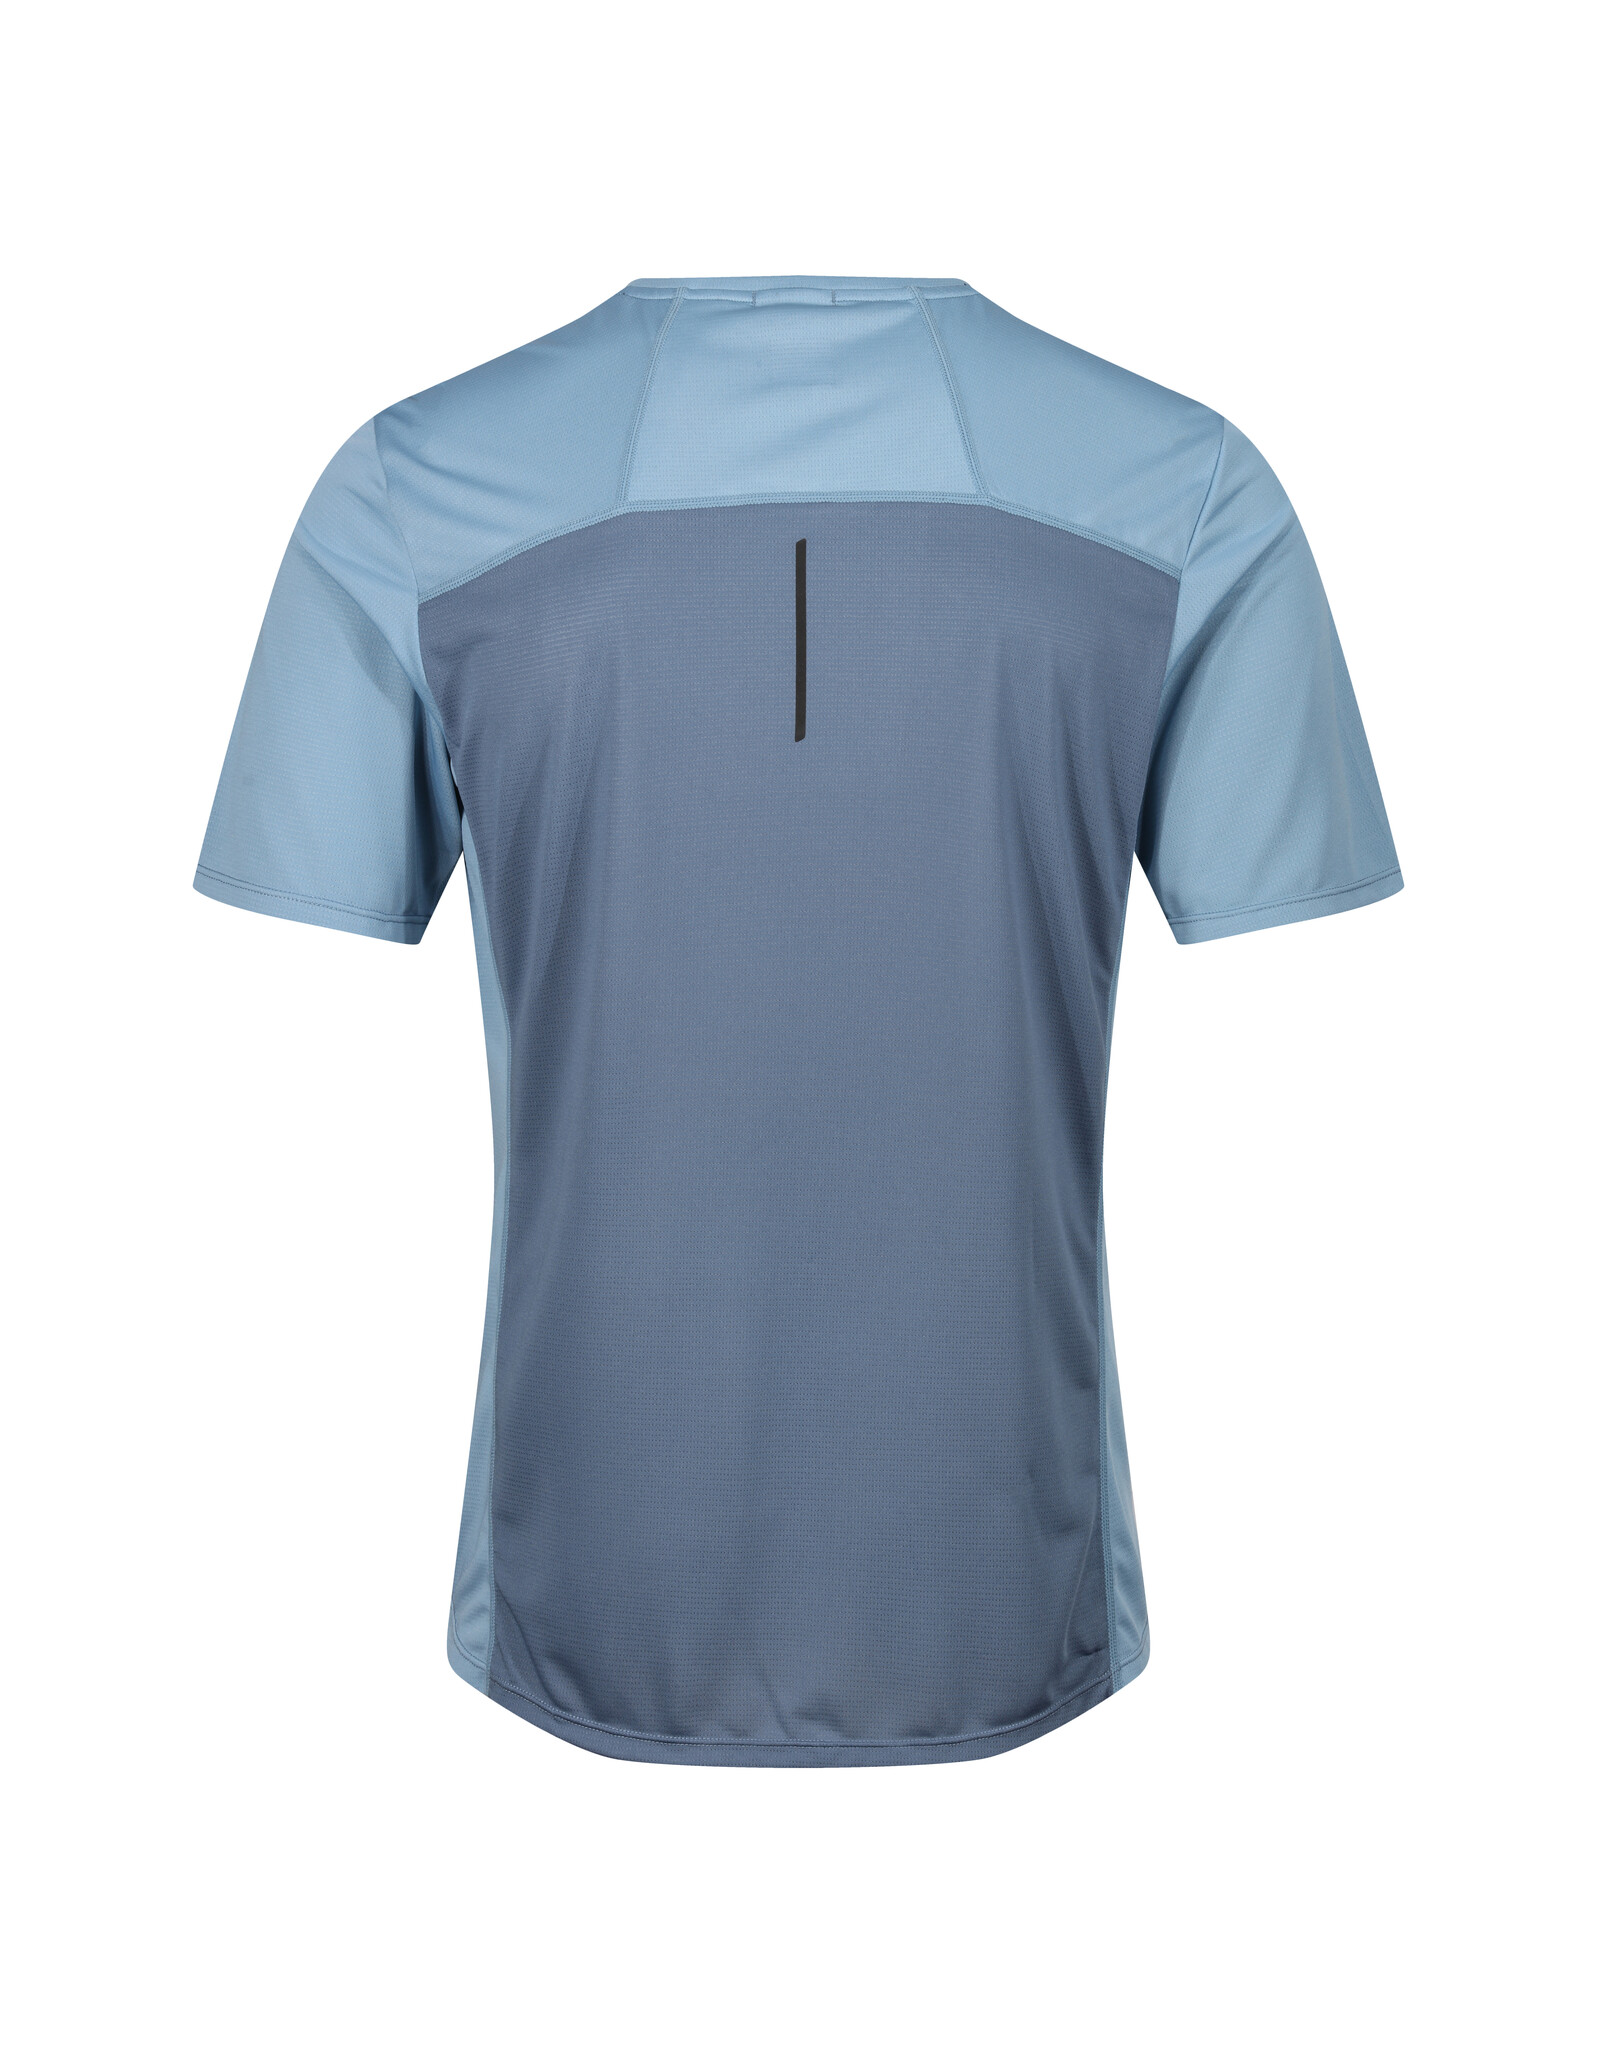 Inov-8 Performance Short Sleeve T-Shirt - Homme - Blue Grey/Slate